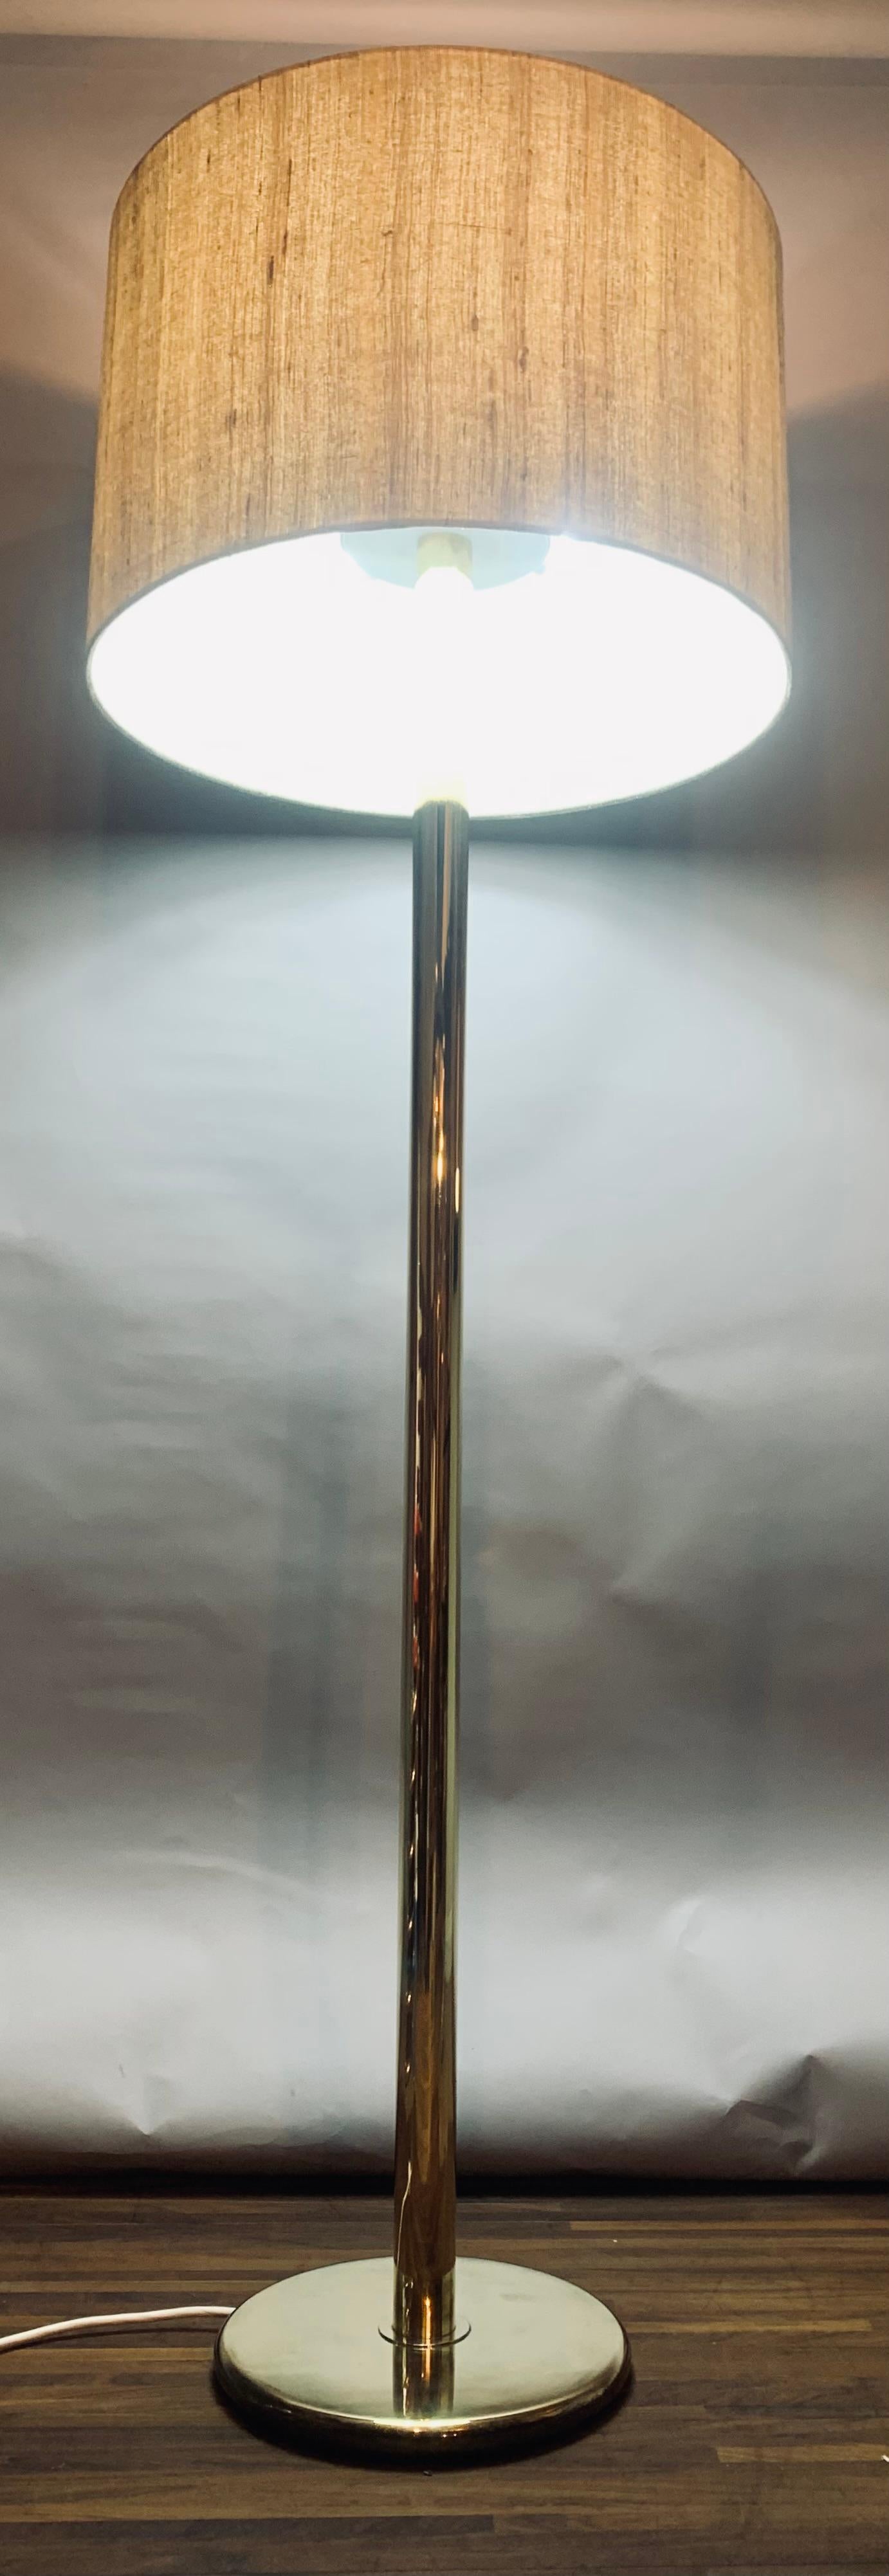 Painted 1970s German Cosack Leuchten Polished Brass Floor Lamp Inc Original Shade